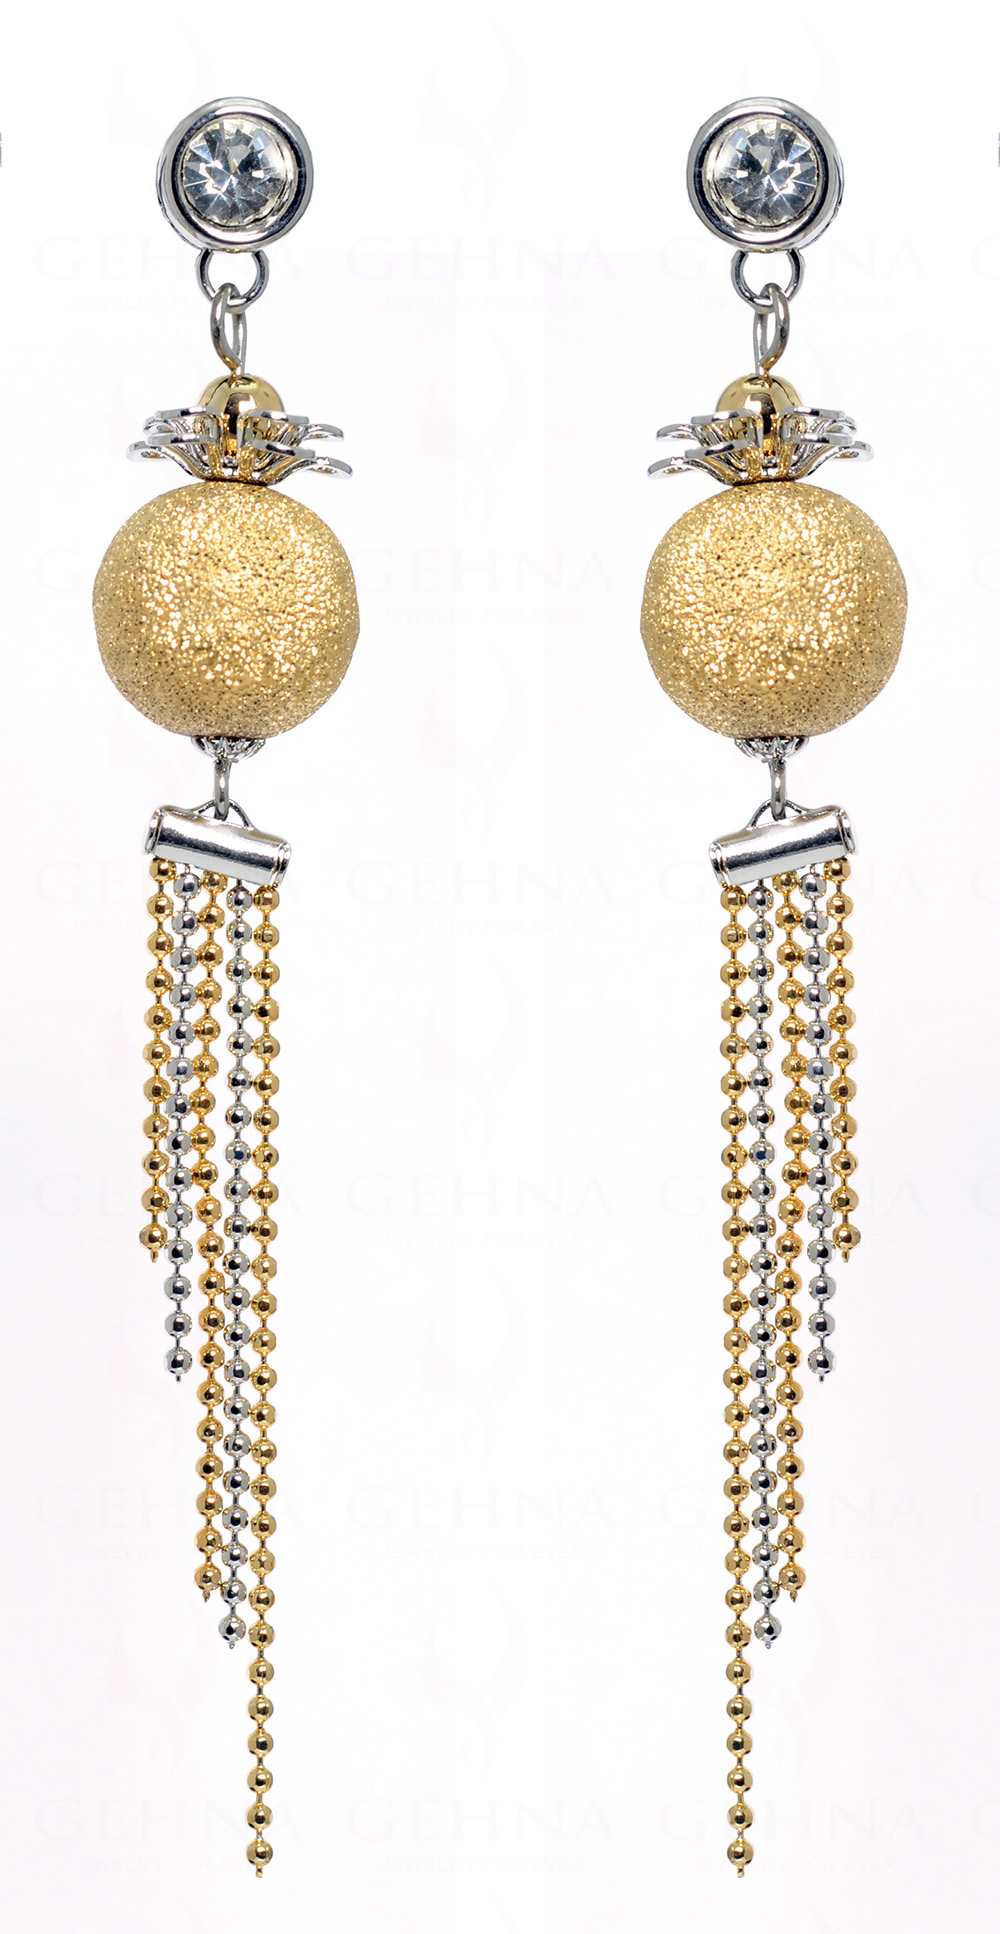 Zircon & Simulated Diamond Studded Golden Ball Shaped Earrings FE-1046